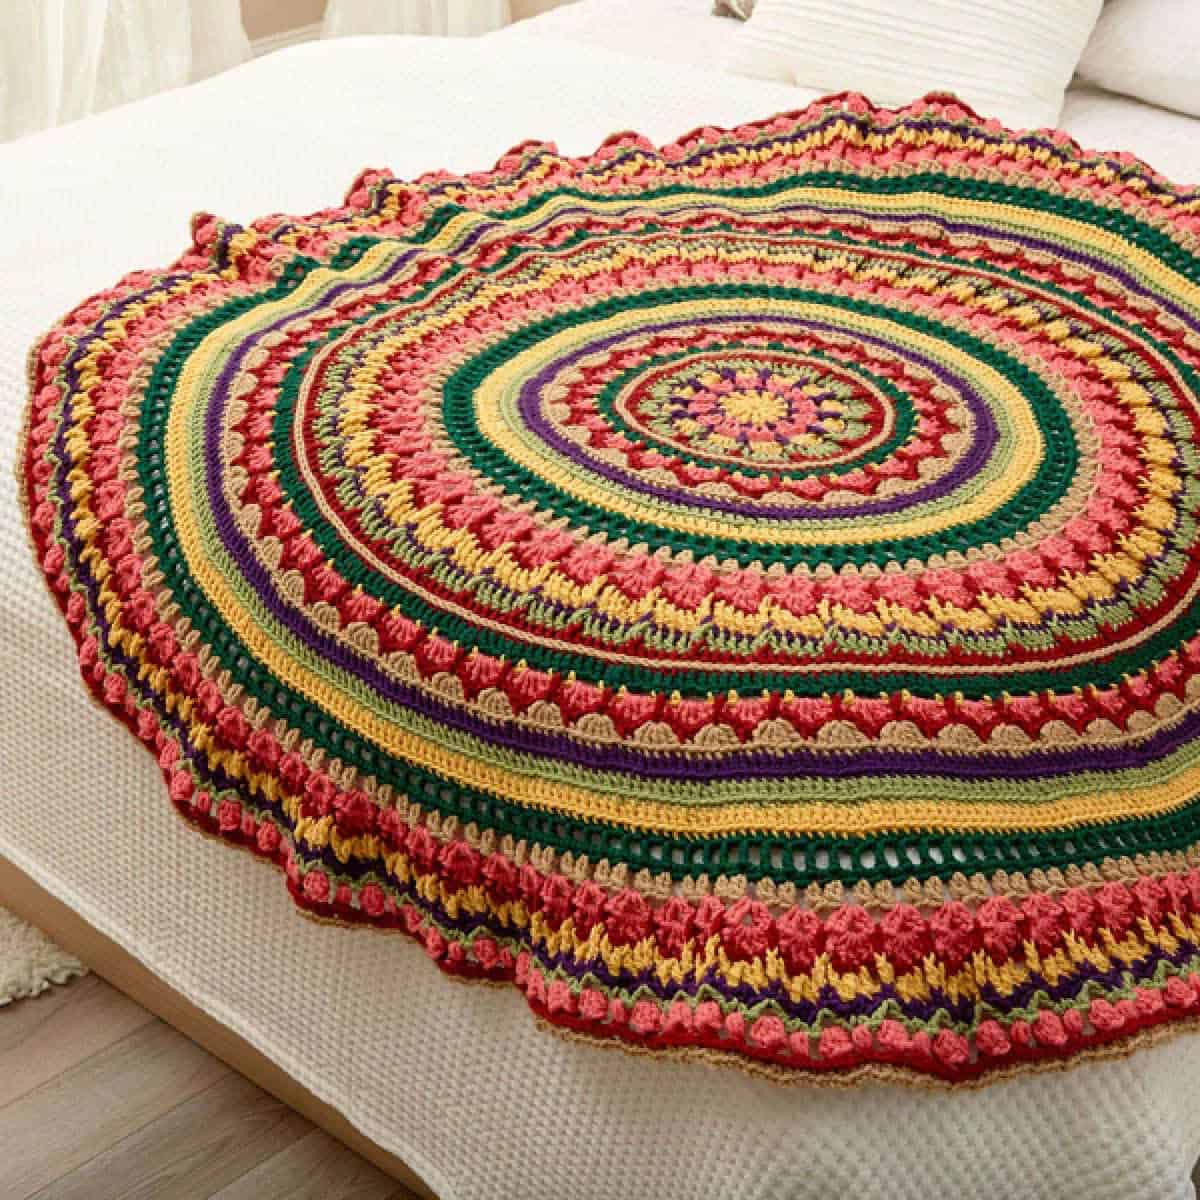 Crochet Round and Mandala Blankets